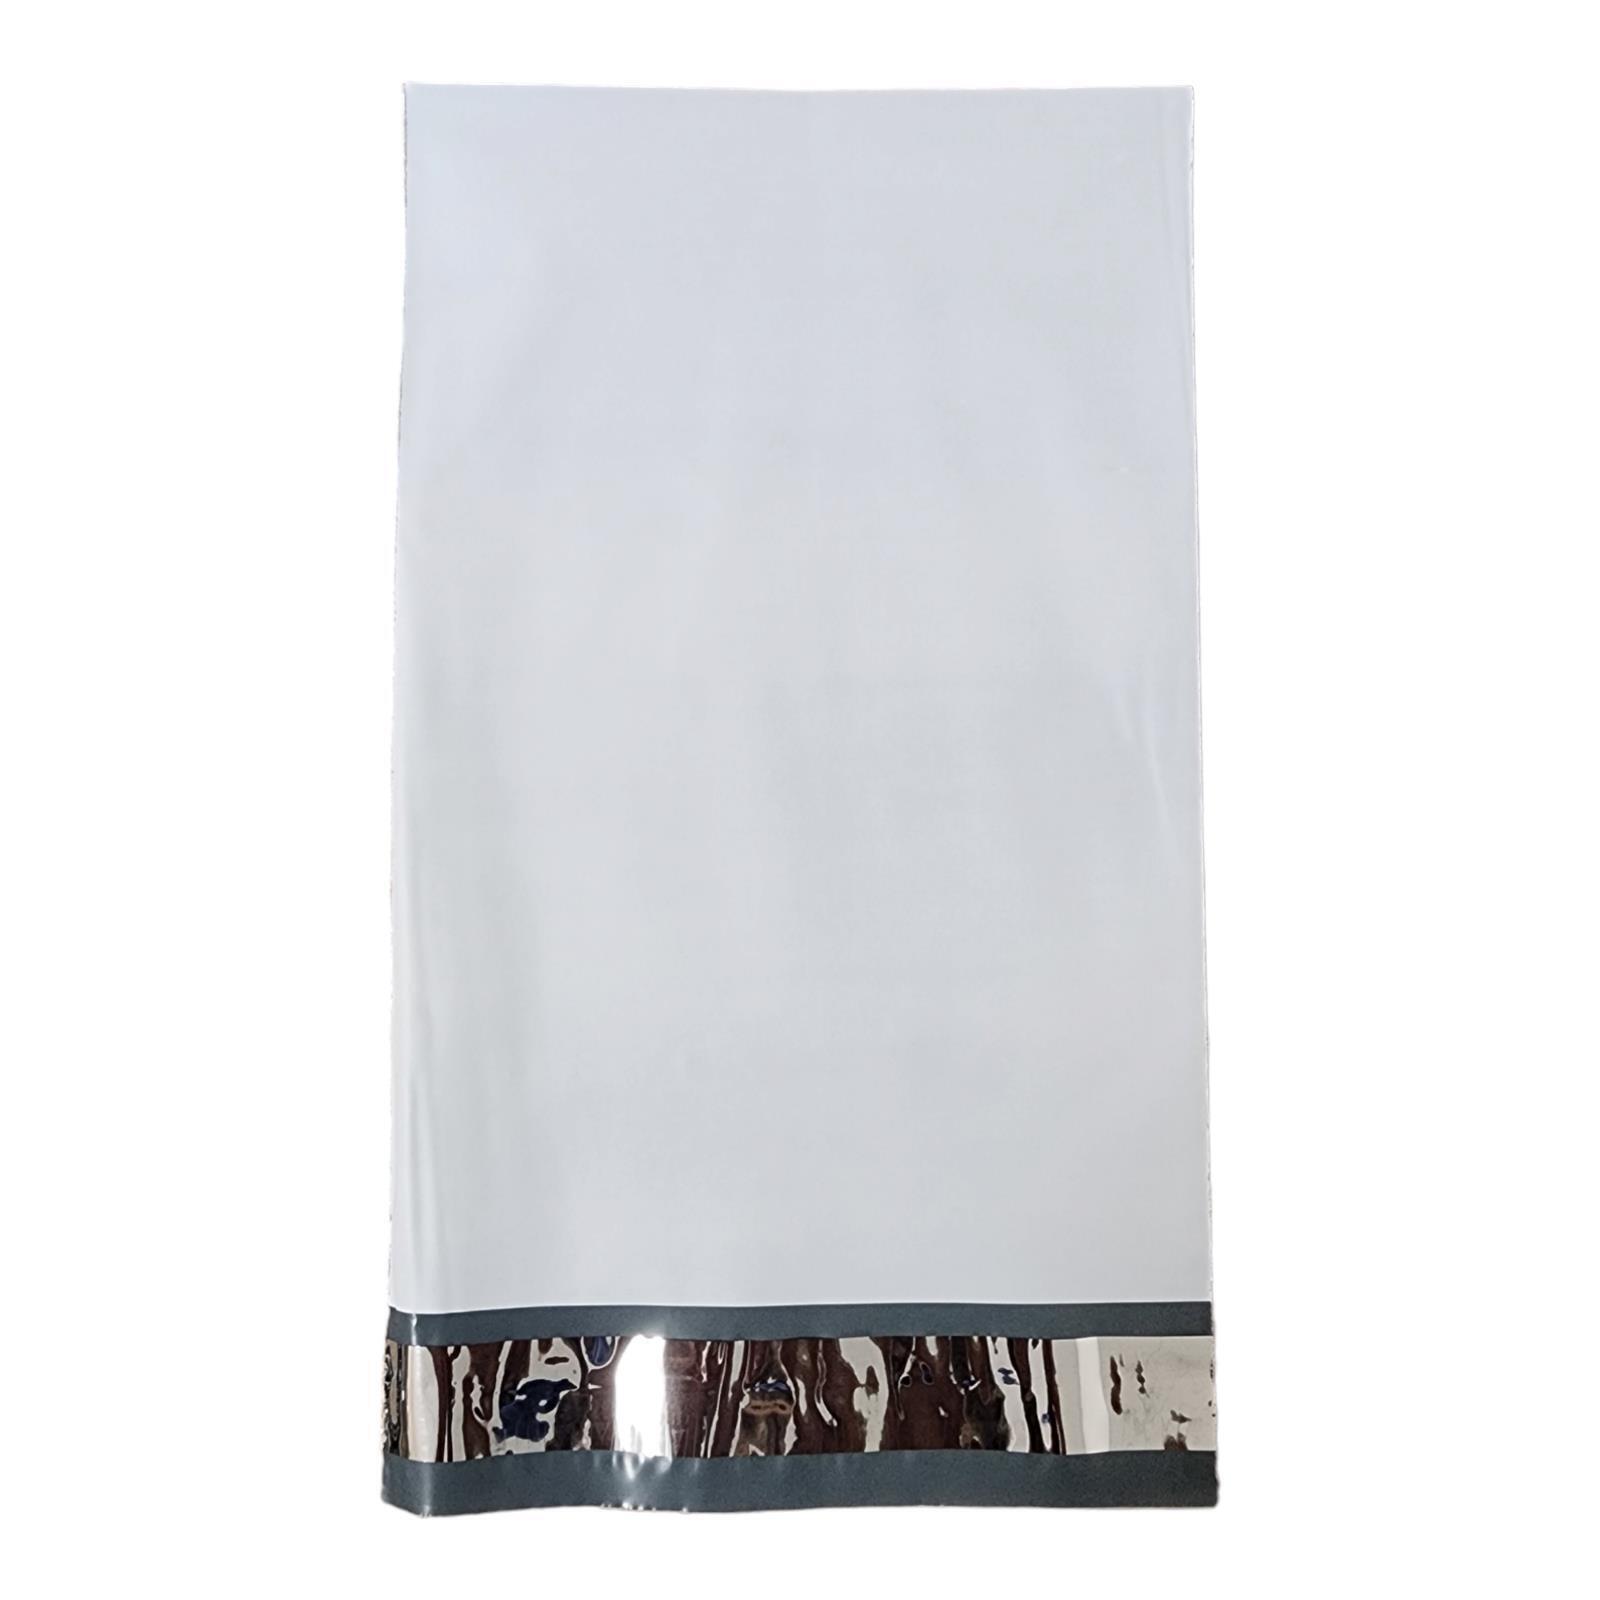 300 pcs 7.5x10" White Poly Mailers Shipping Bags Envelopes Packaging Premium Bag